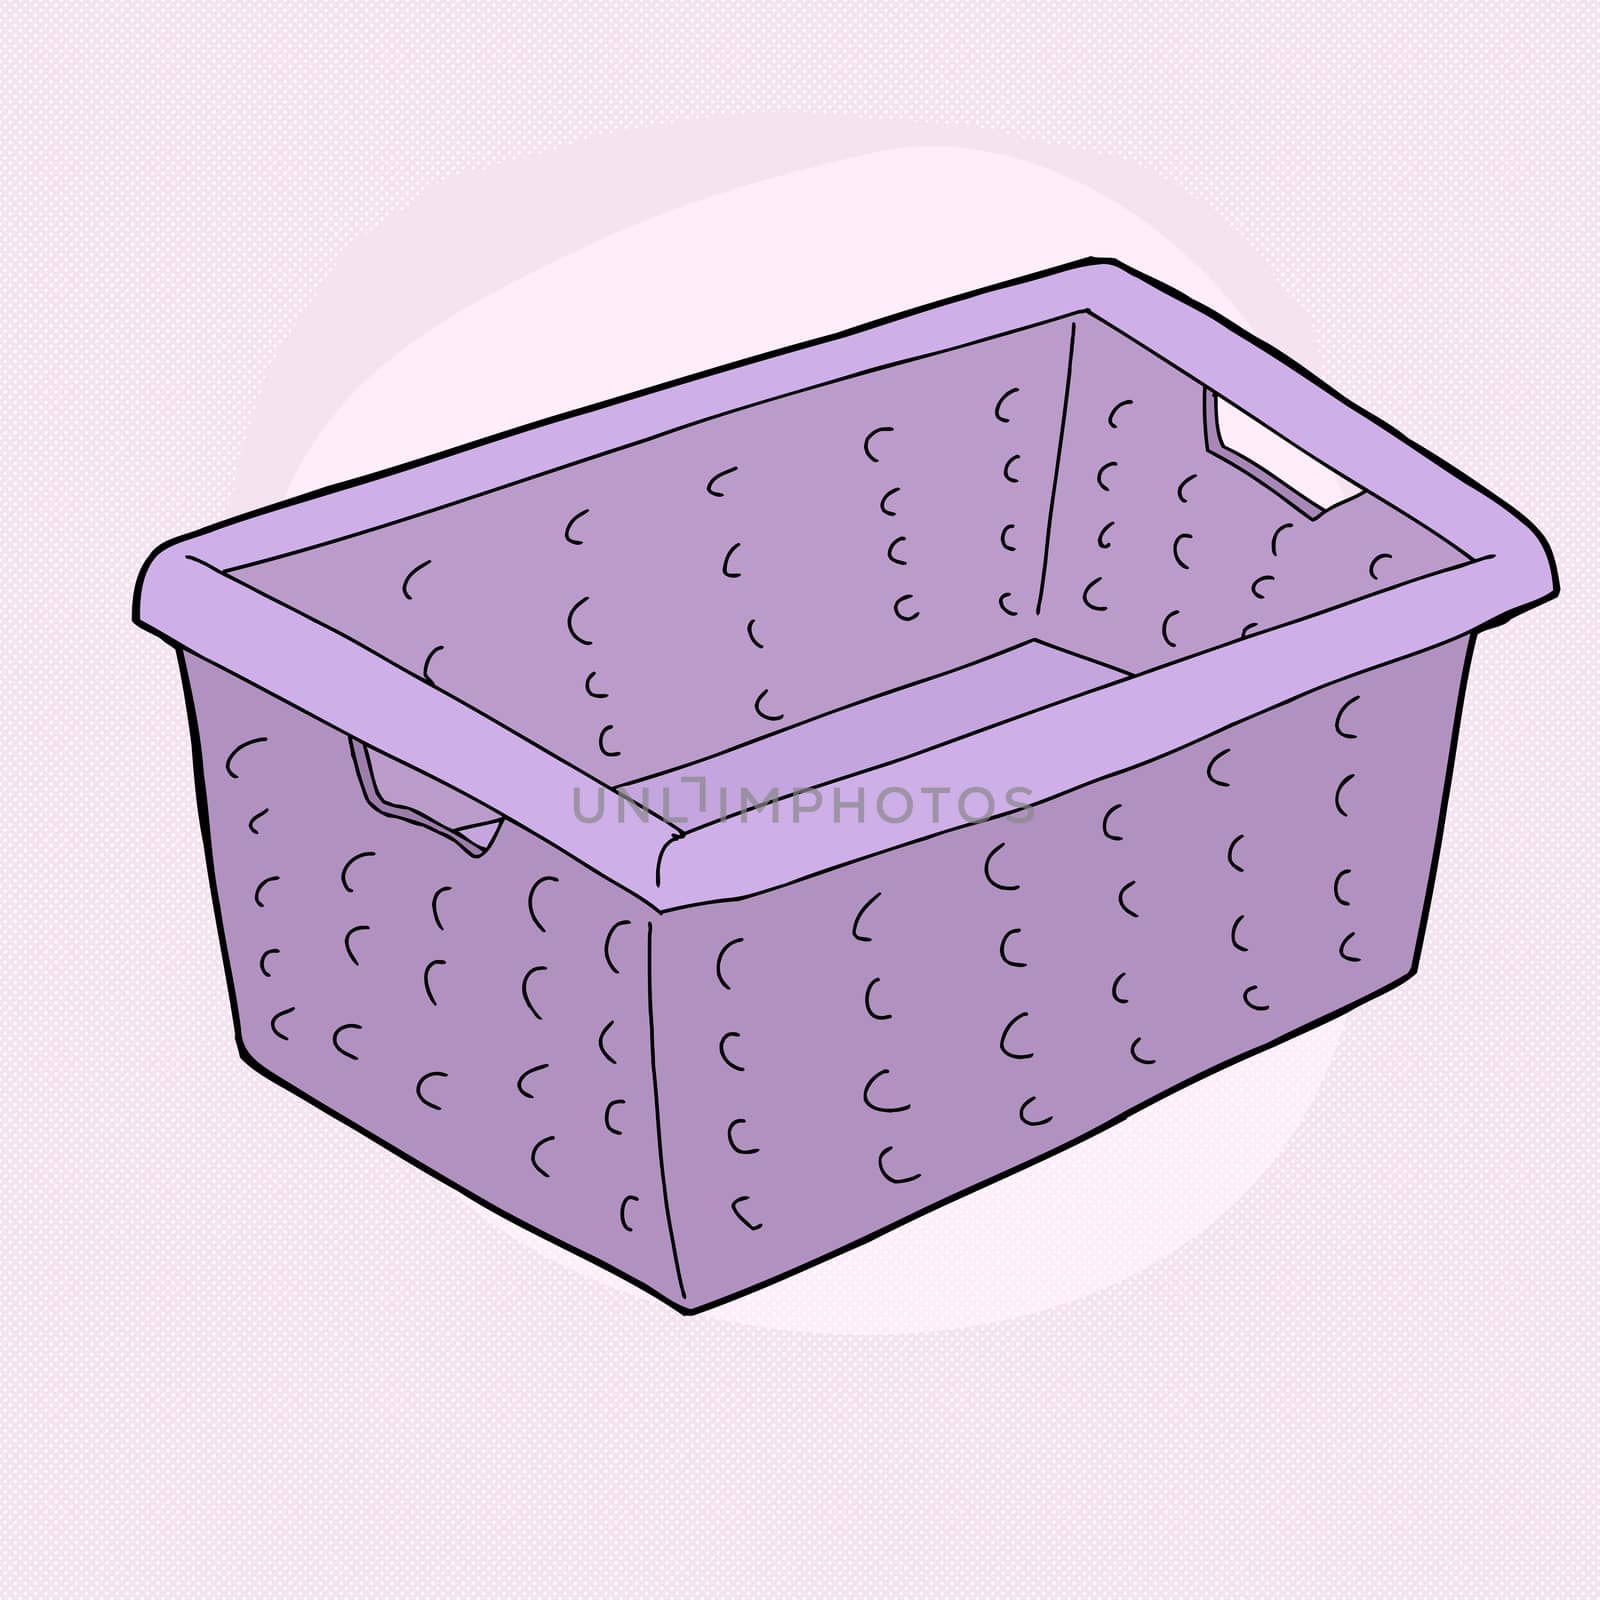 Single cartoon doodle laundry basket over purple background